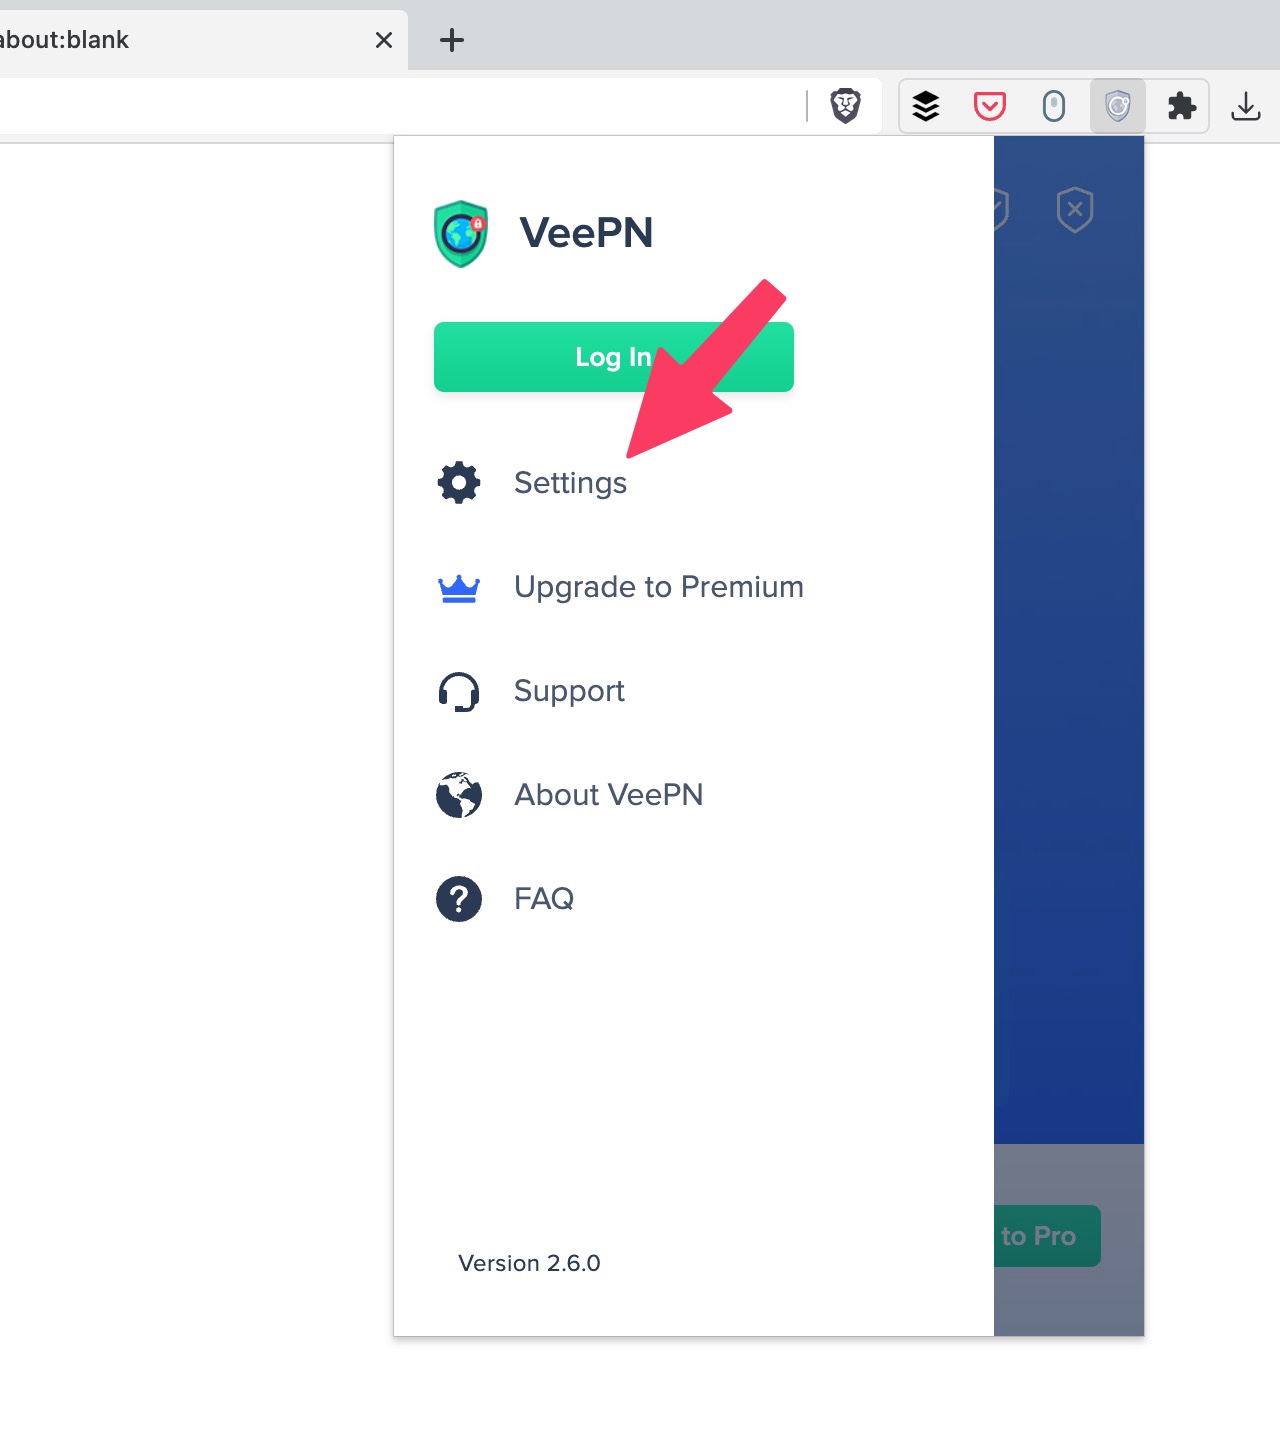 VeePN 免費 Chrome VPN 外掛